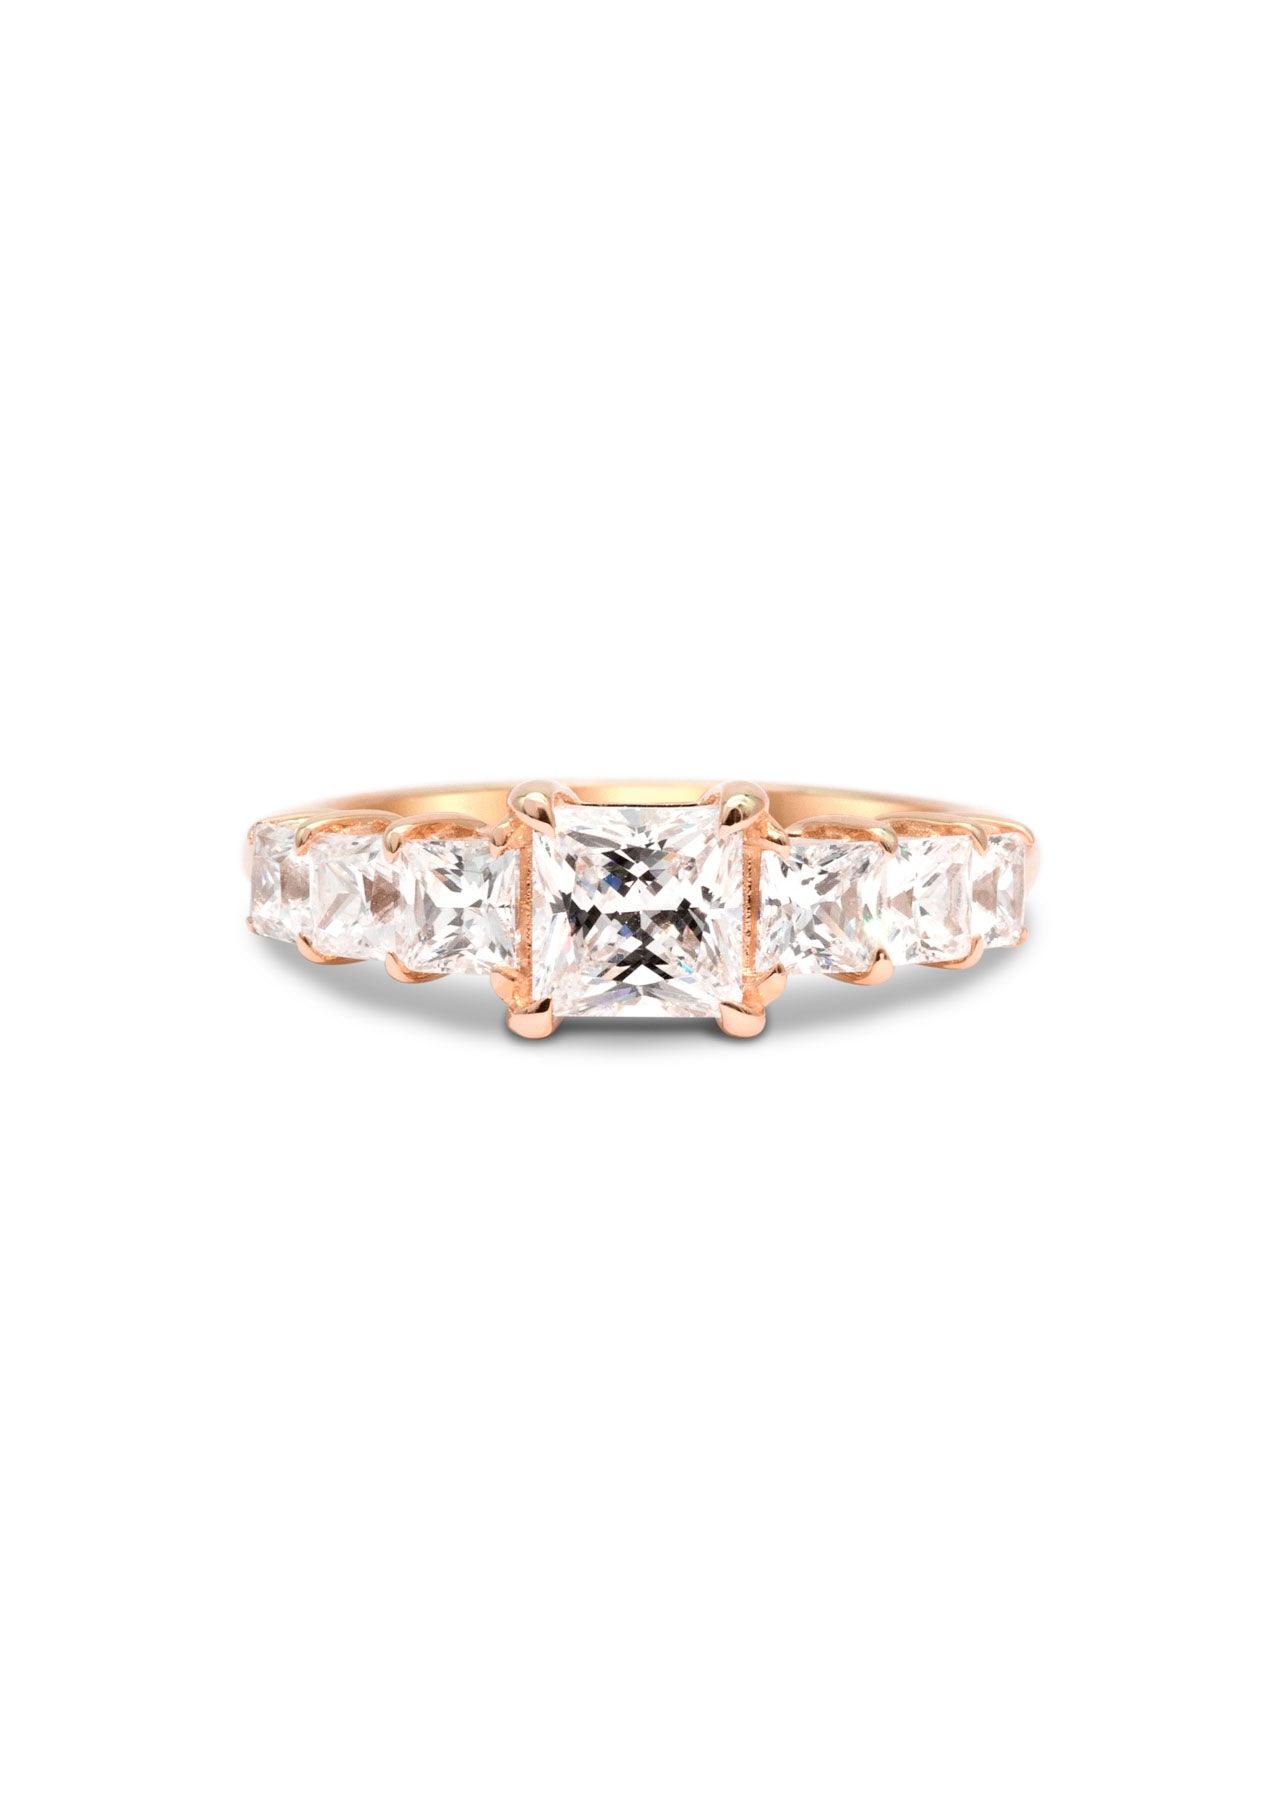 The Princess Banks Rose Gold Cultured Diamond Ring